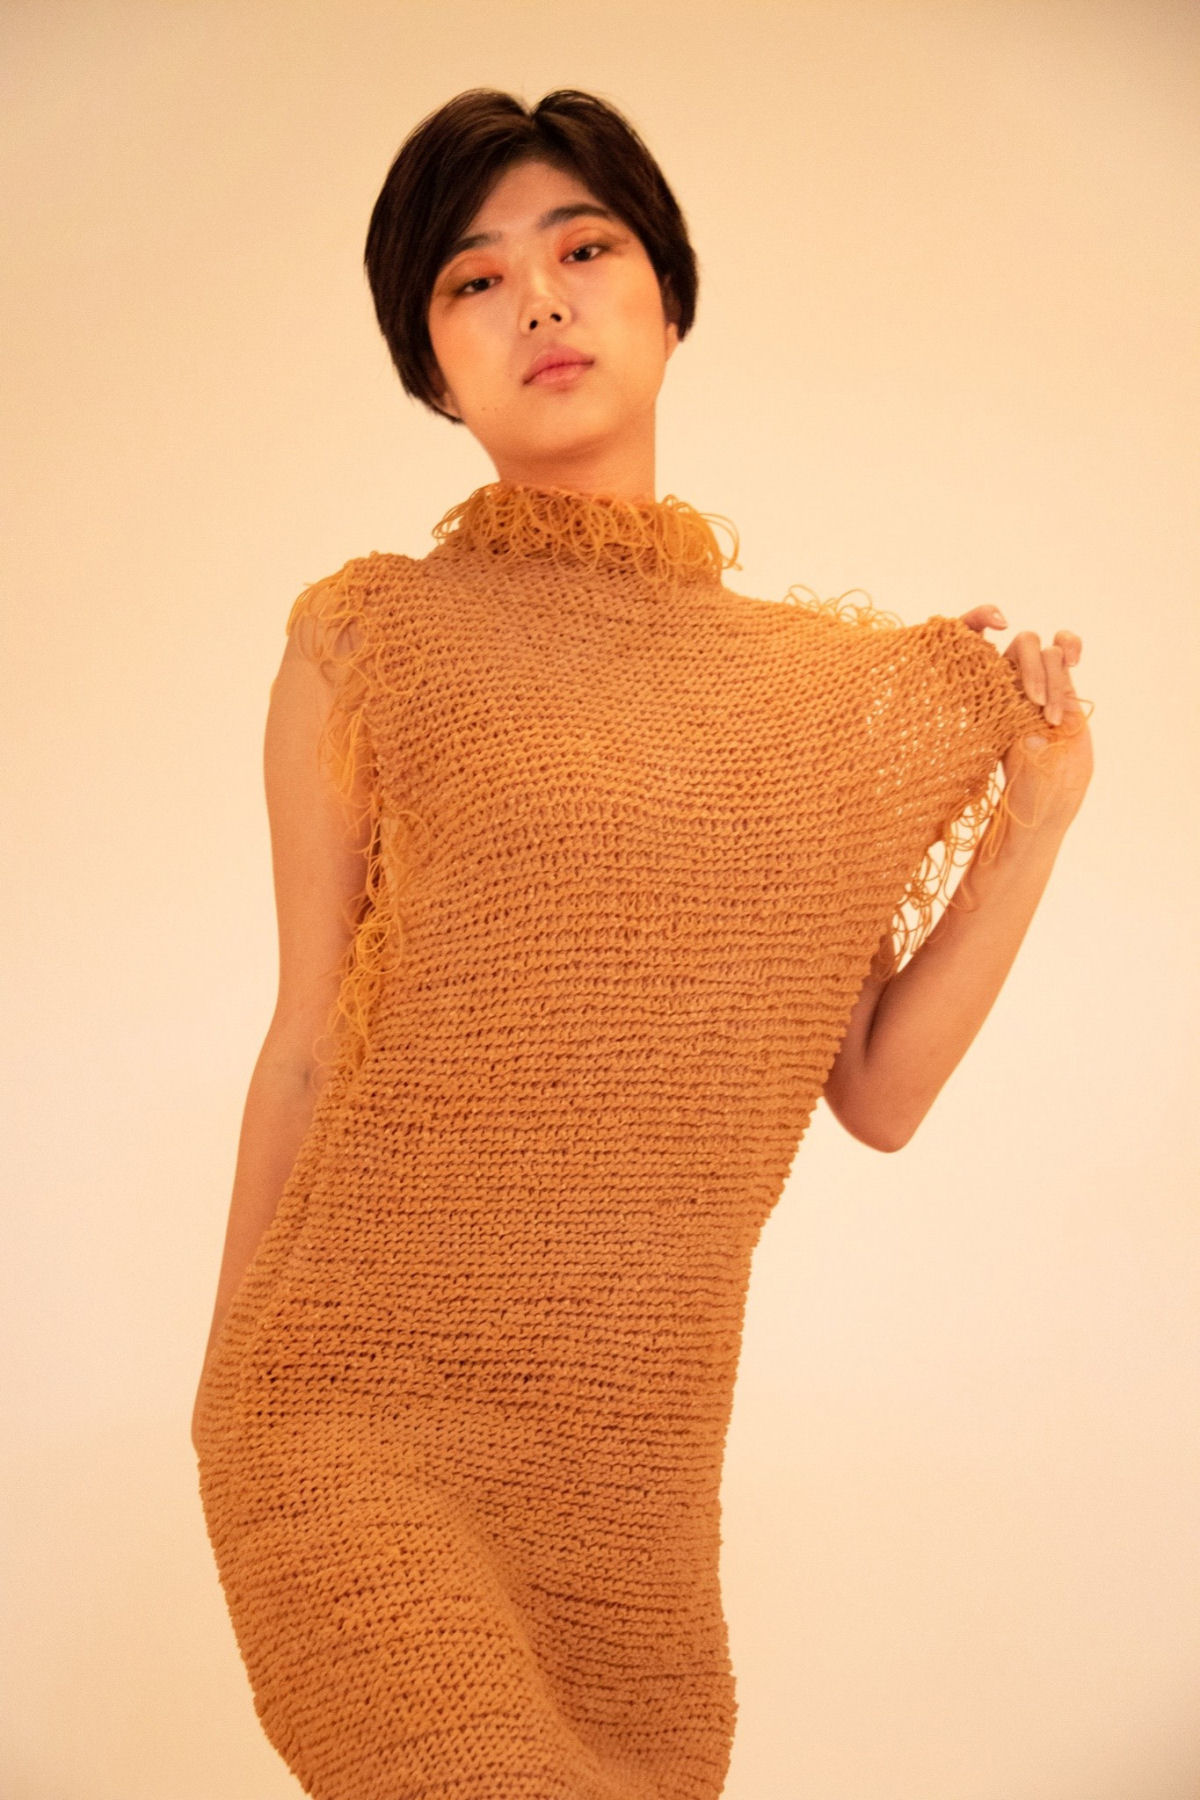 Estudante japonesa de arte cria roupas exclusivamente com elásticos